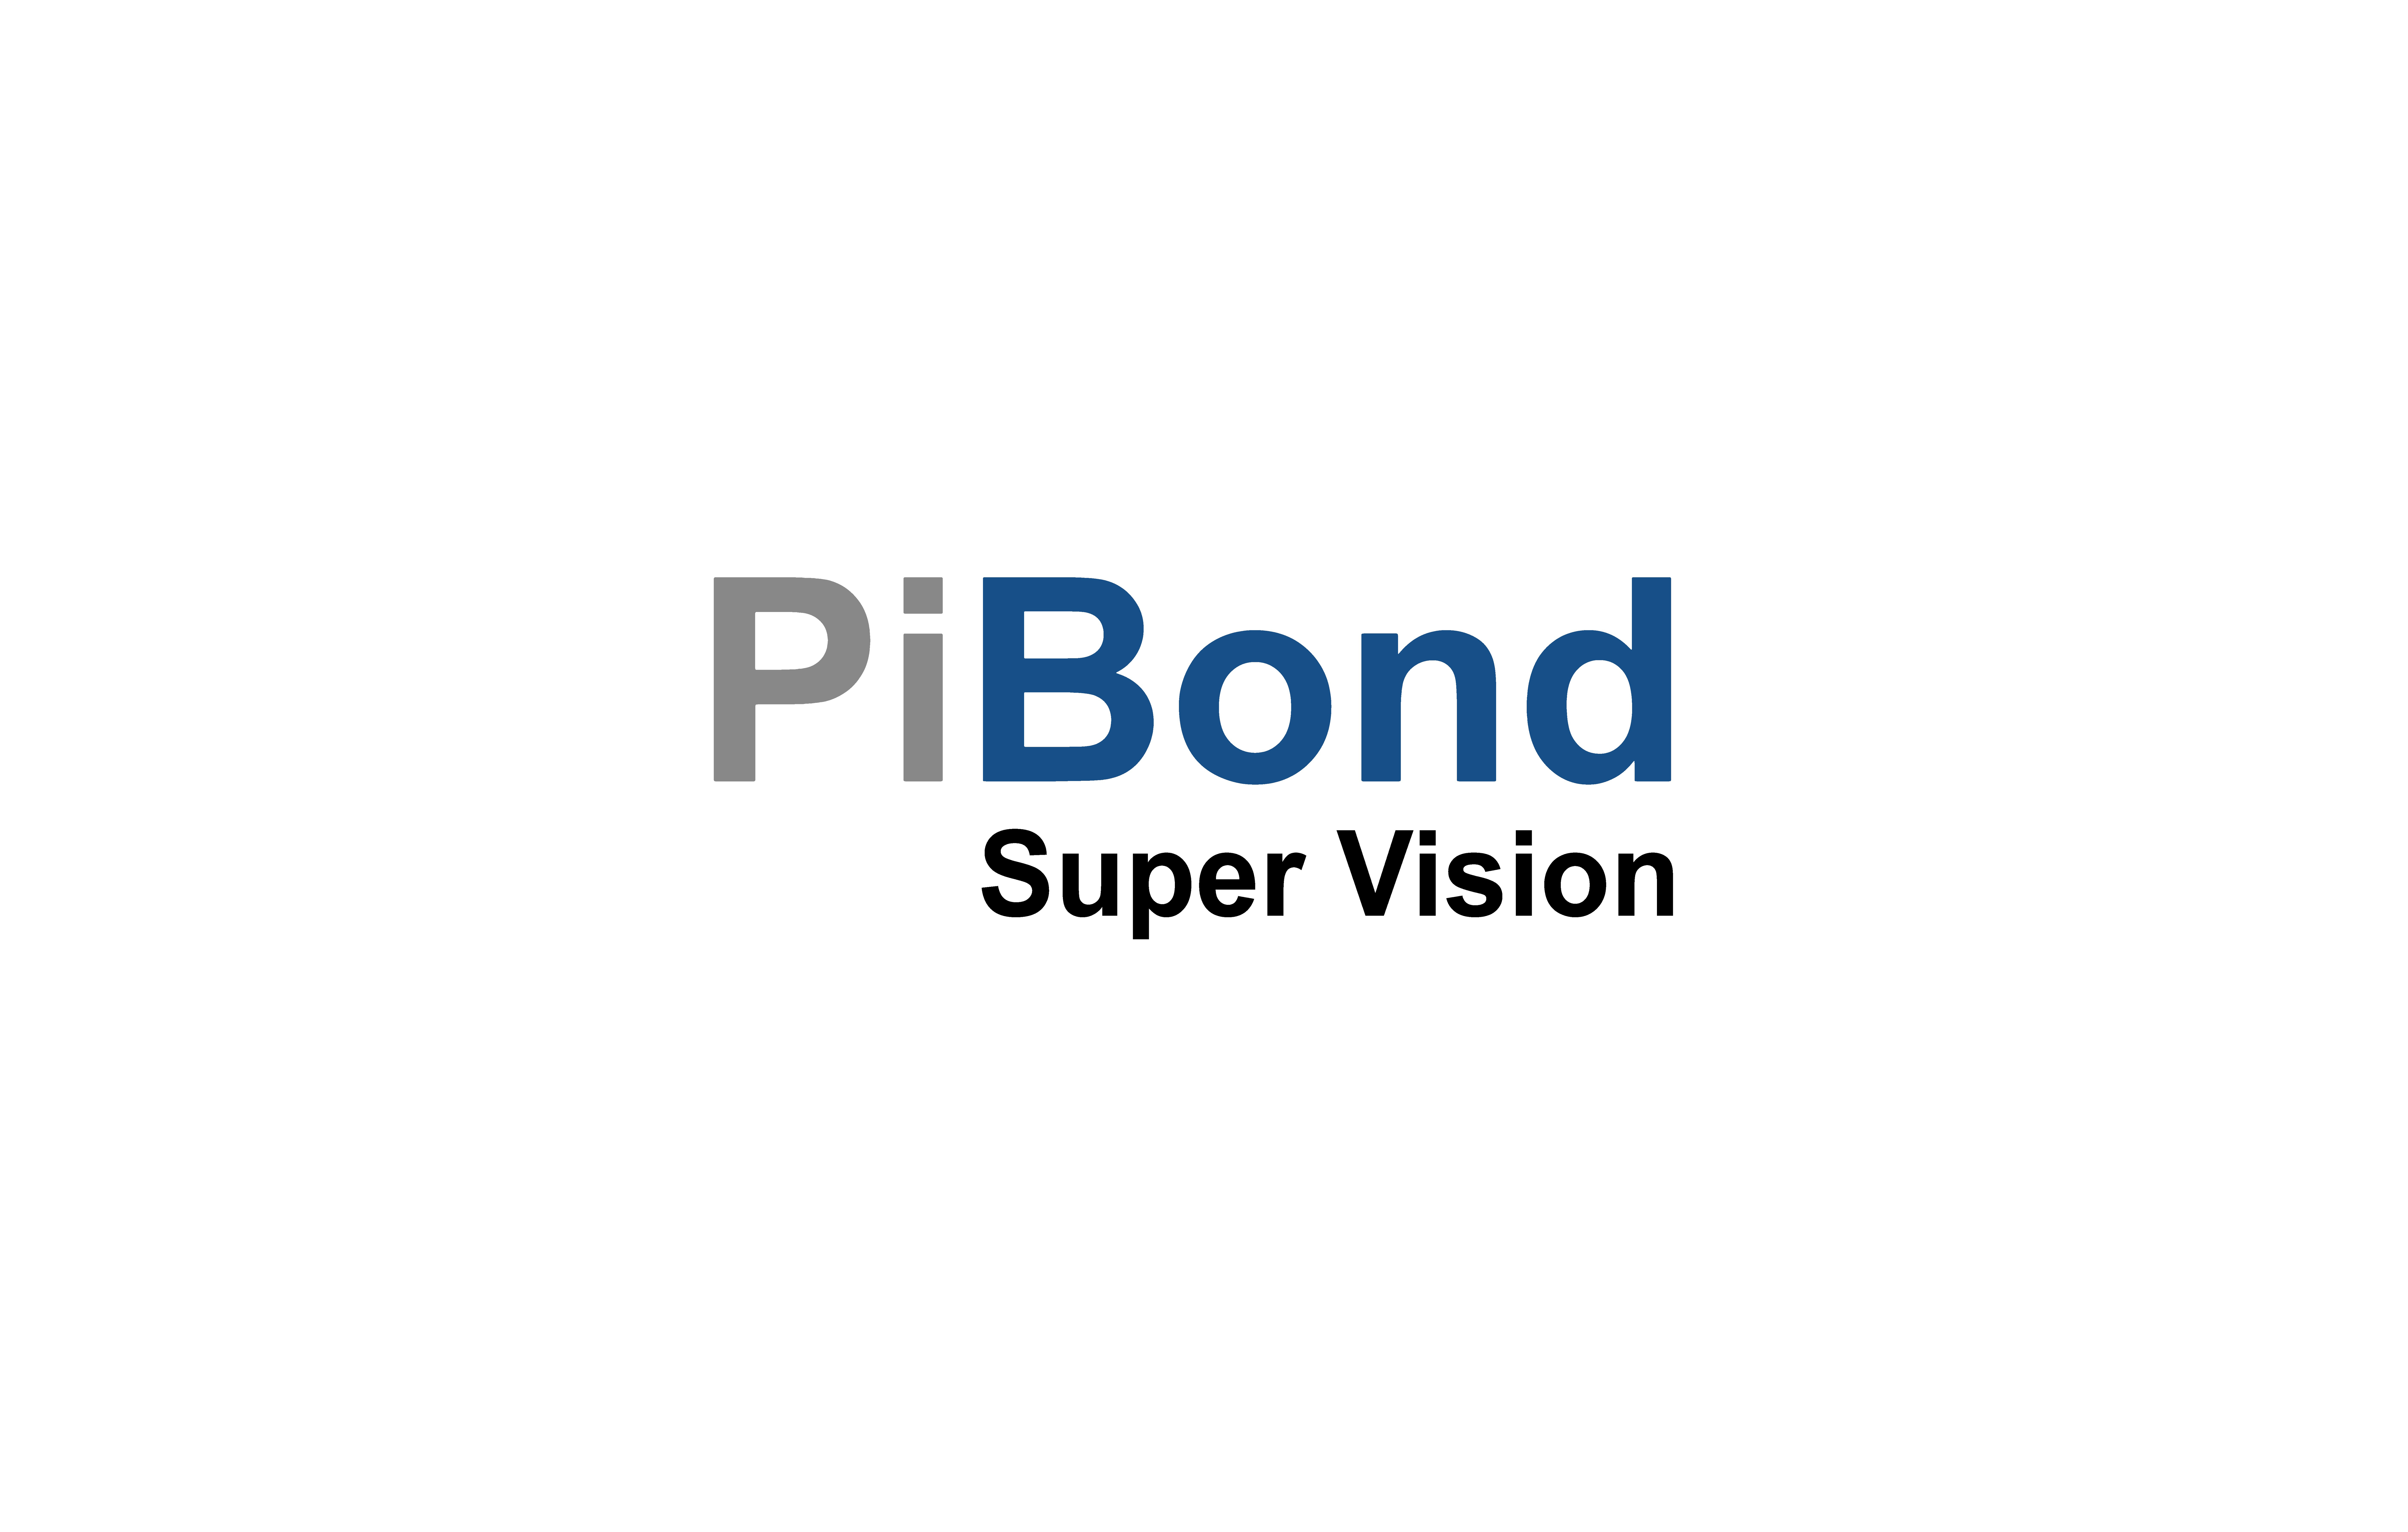 PiBond Super Vision